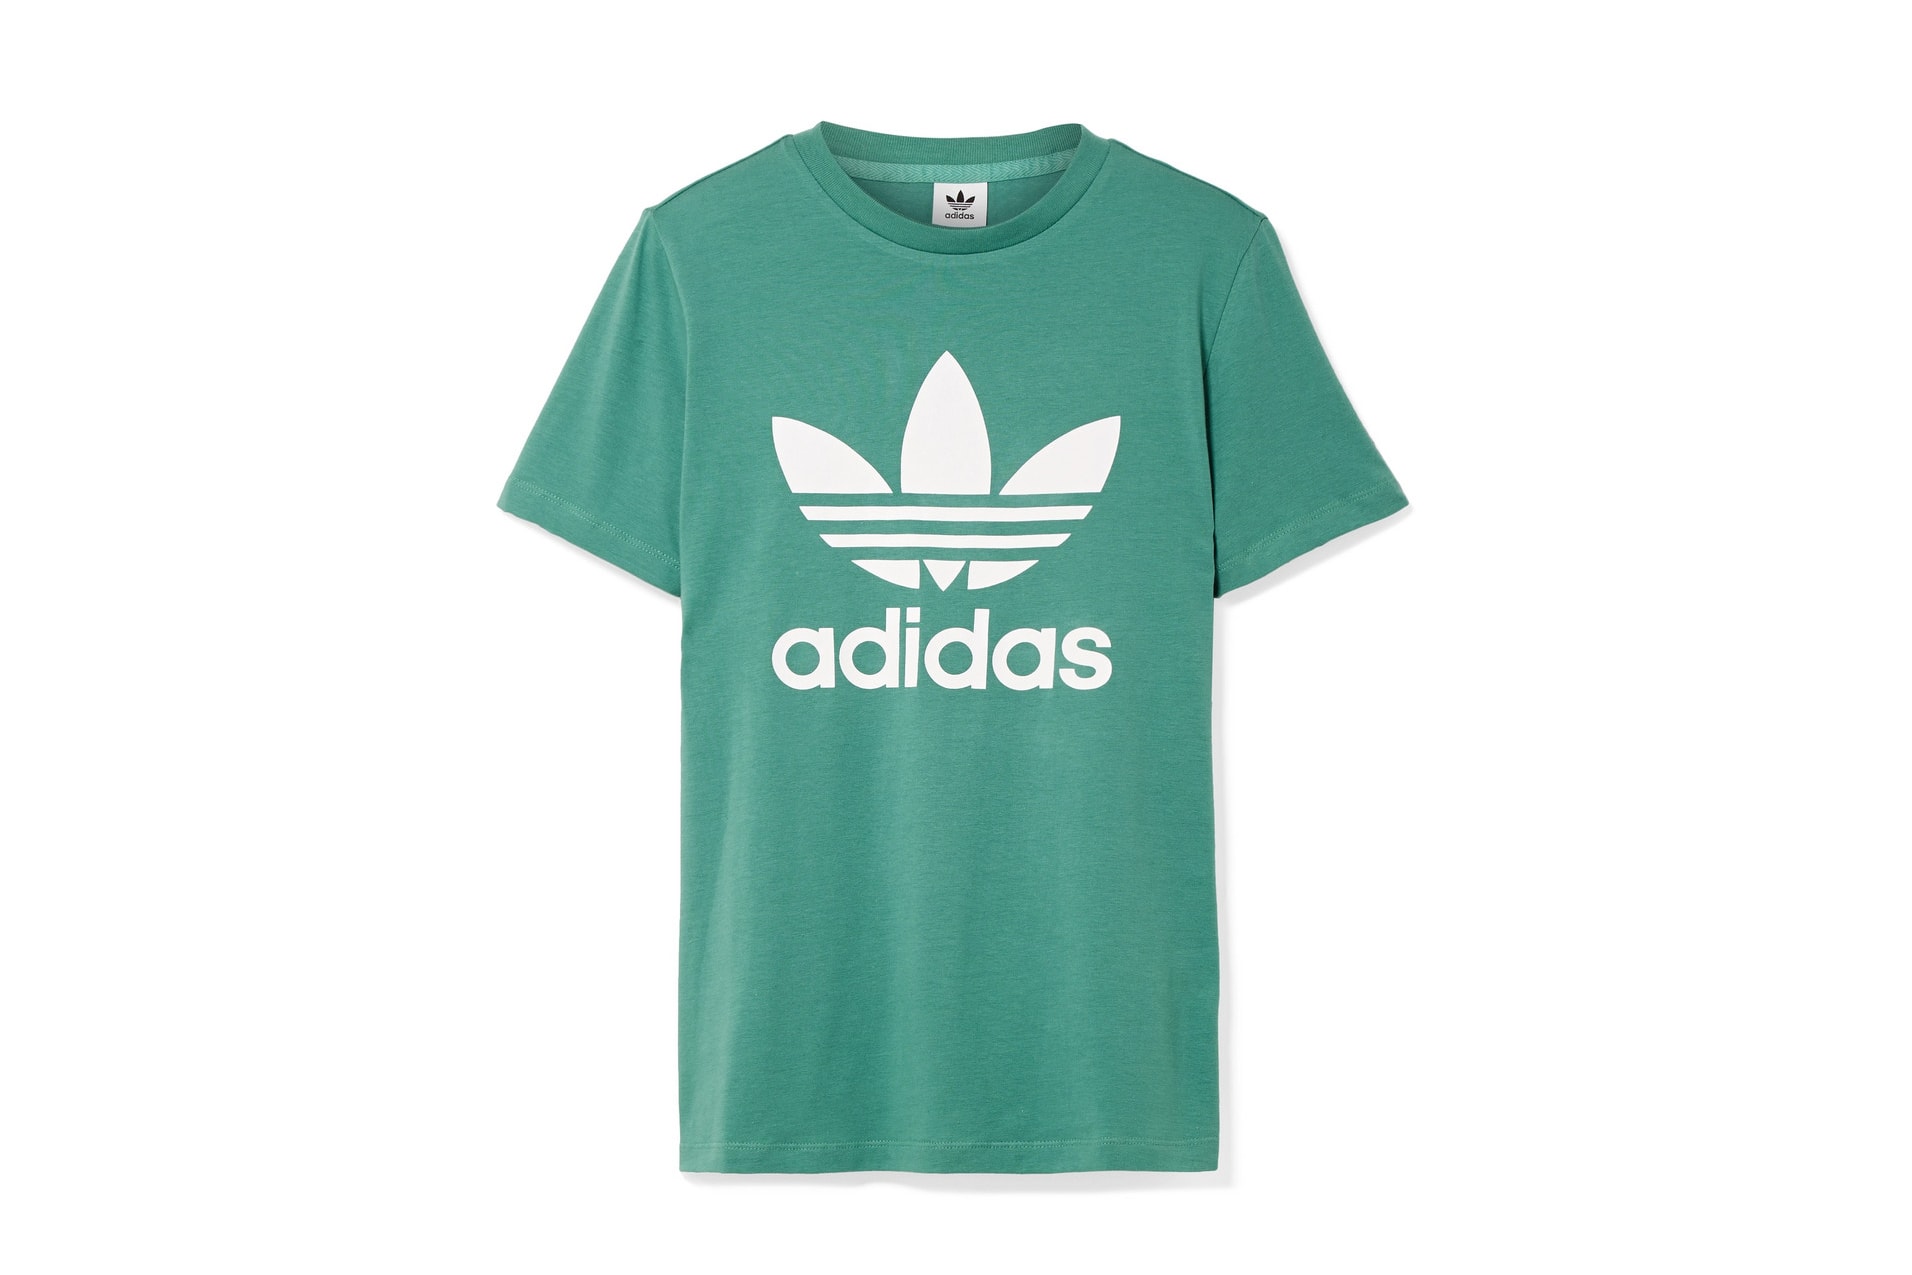 adidas Originals Trefoil Logo T-Shirt in Green White Retro Streetwear Staple Piece Sporty